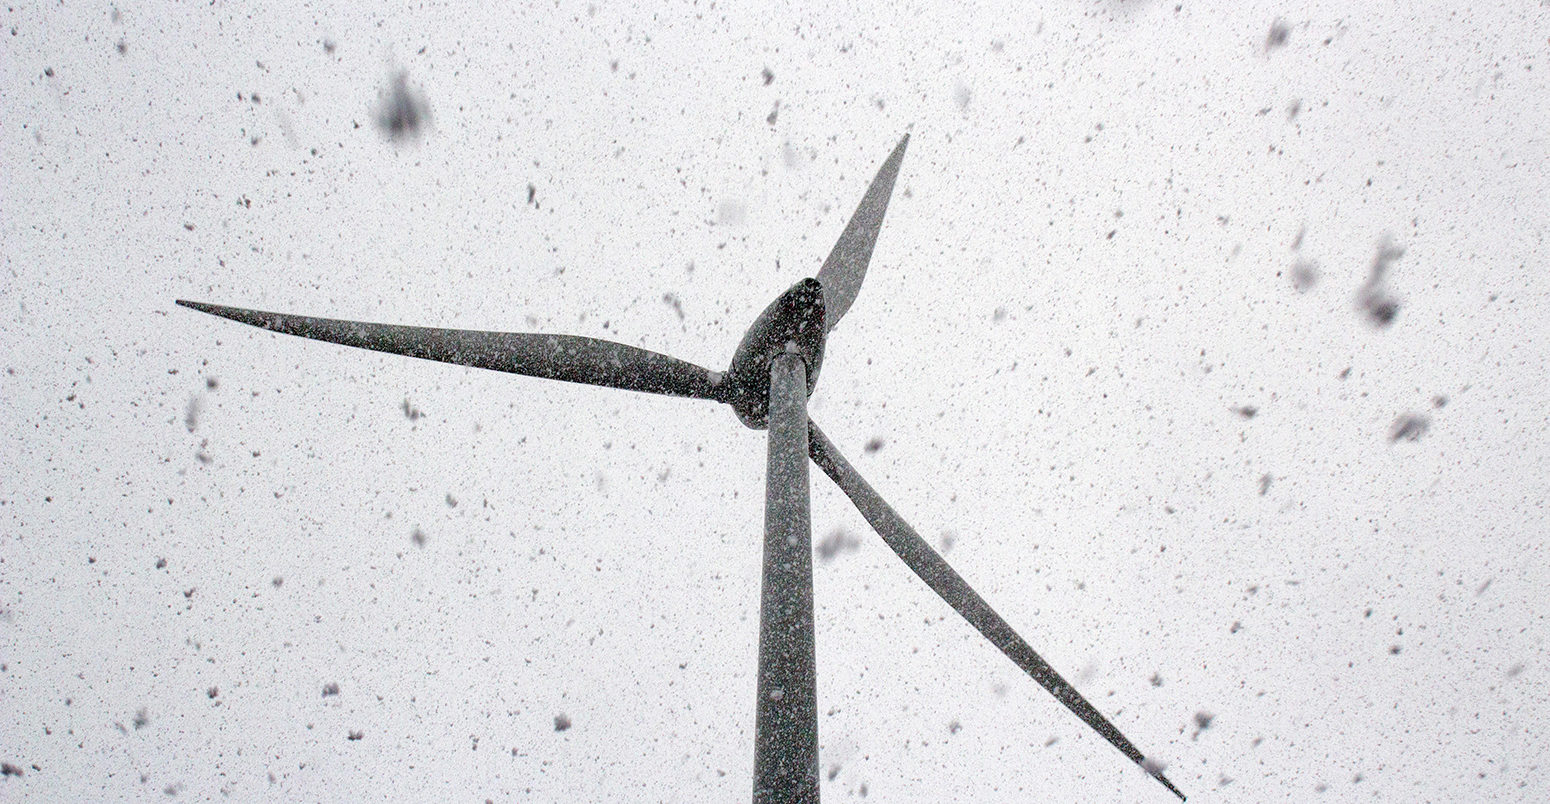 EFCK0B Swaftham, Norfolk, UK. 31st Jan, 2015. Wind Turbine in the snow 31st Jan 2015 3pm Swaffham, Norfolk